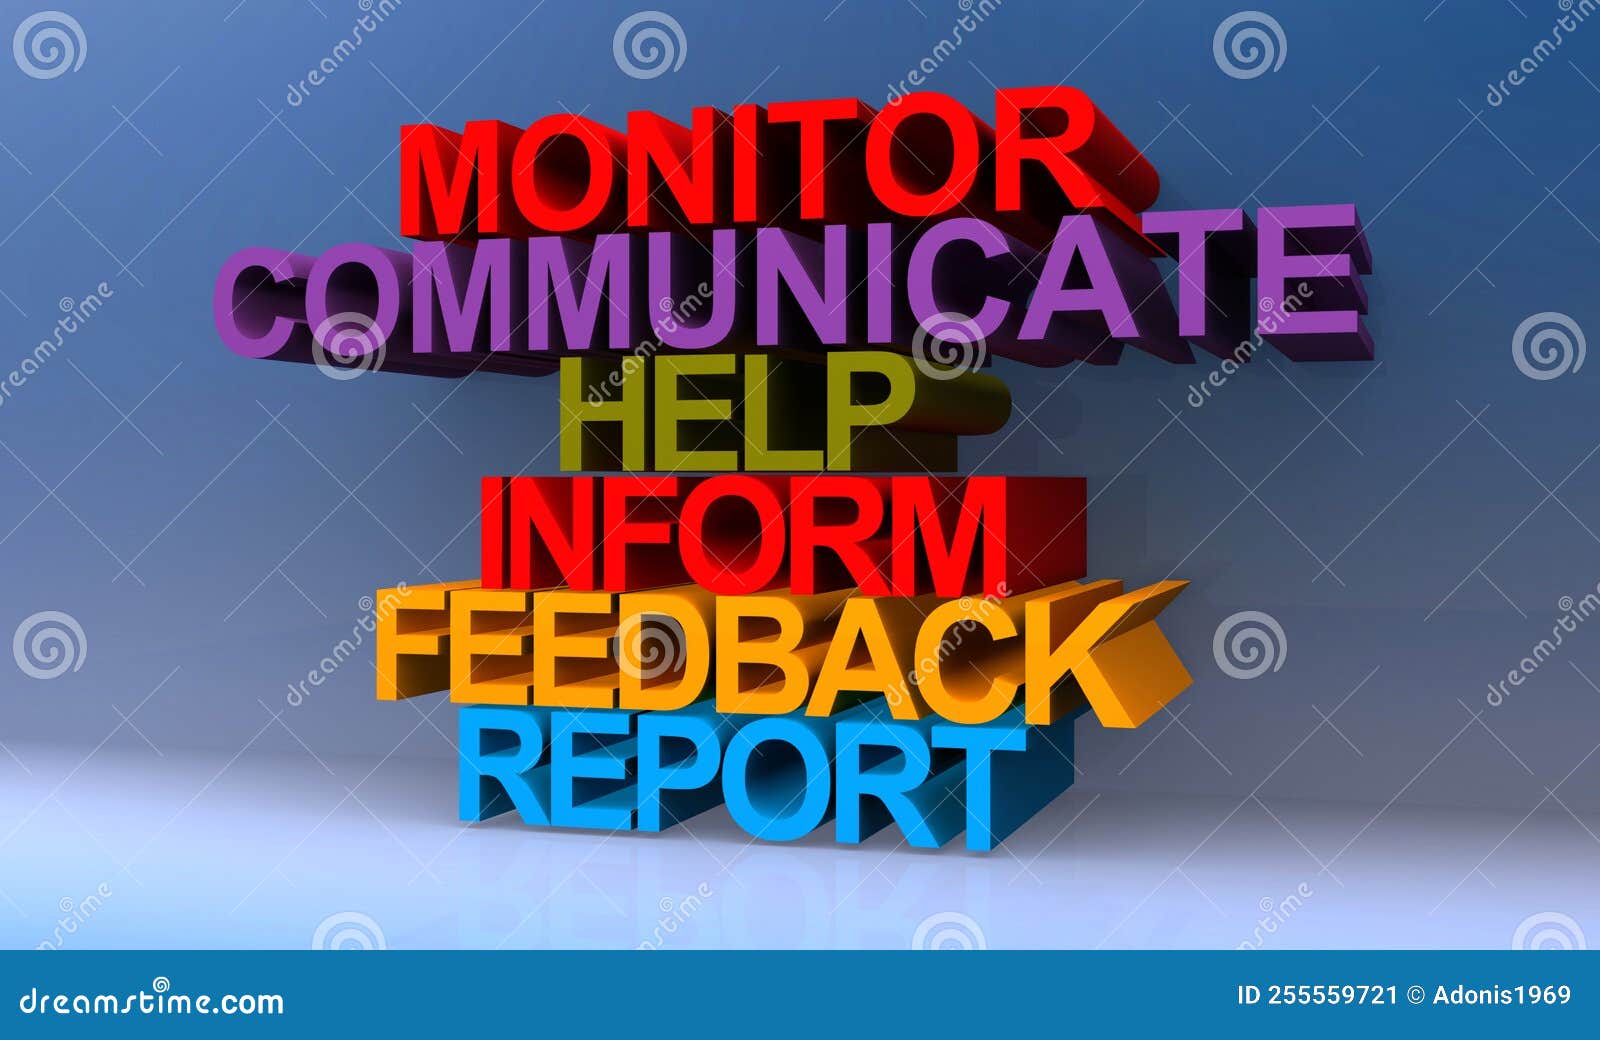 monitor communicate help inform feedback report on blue